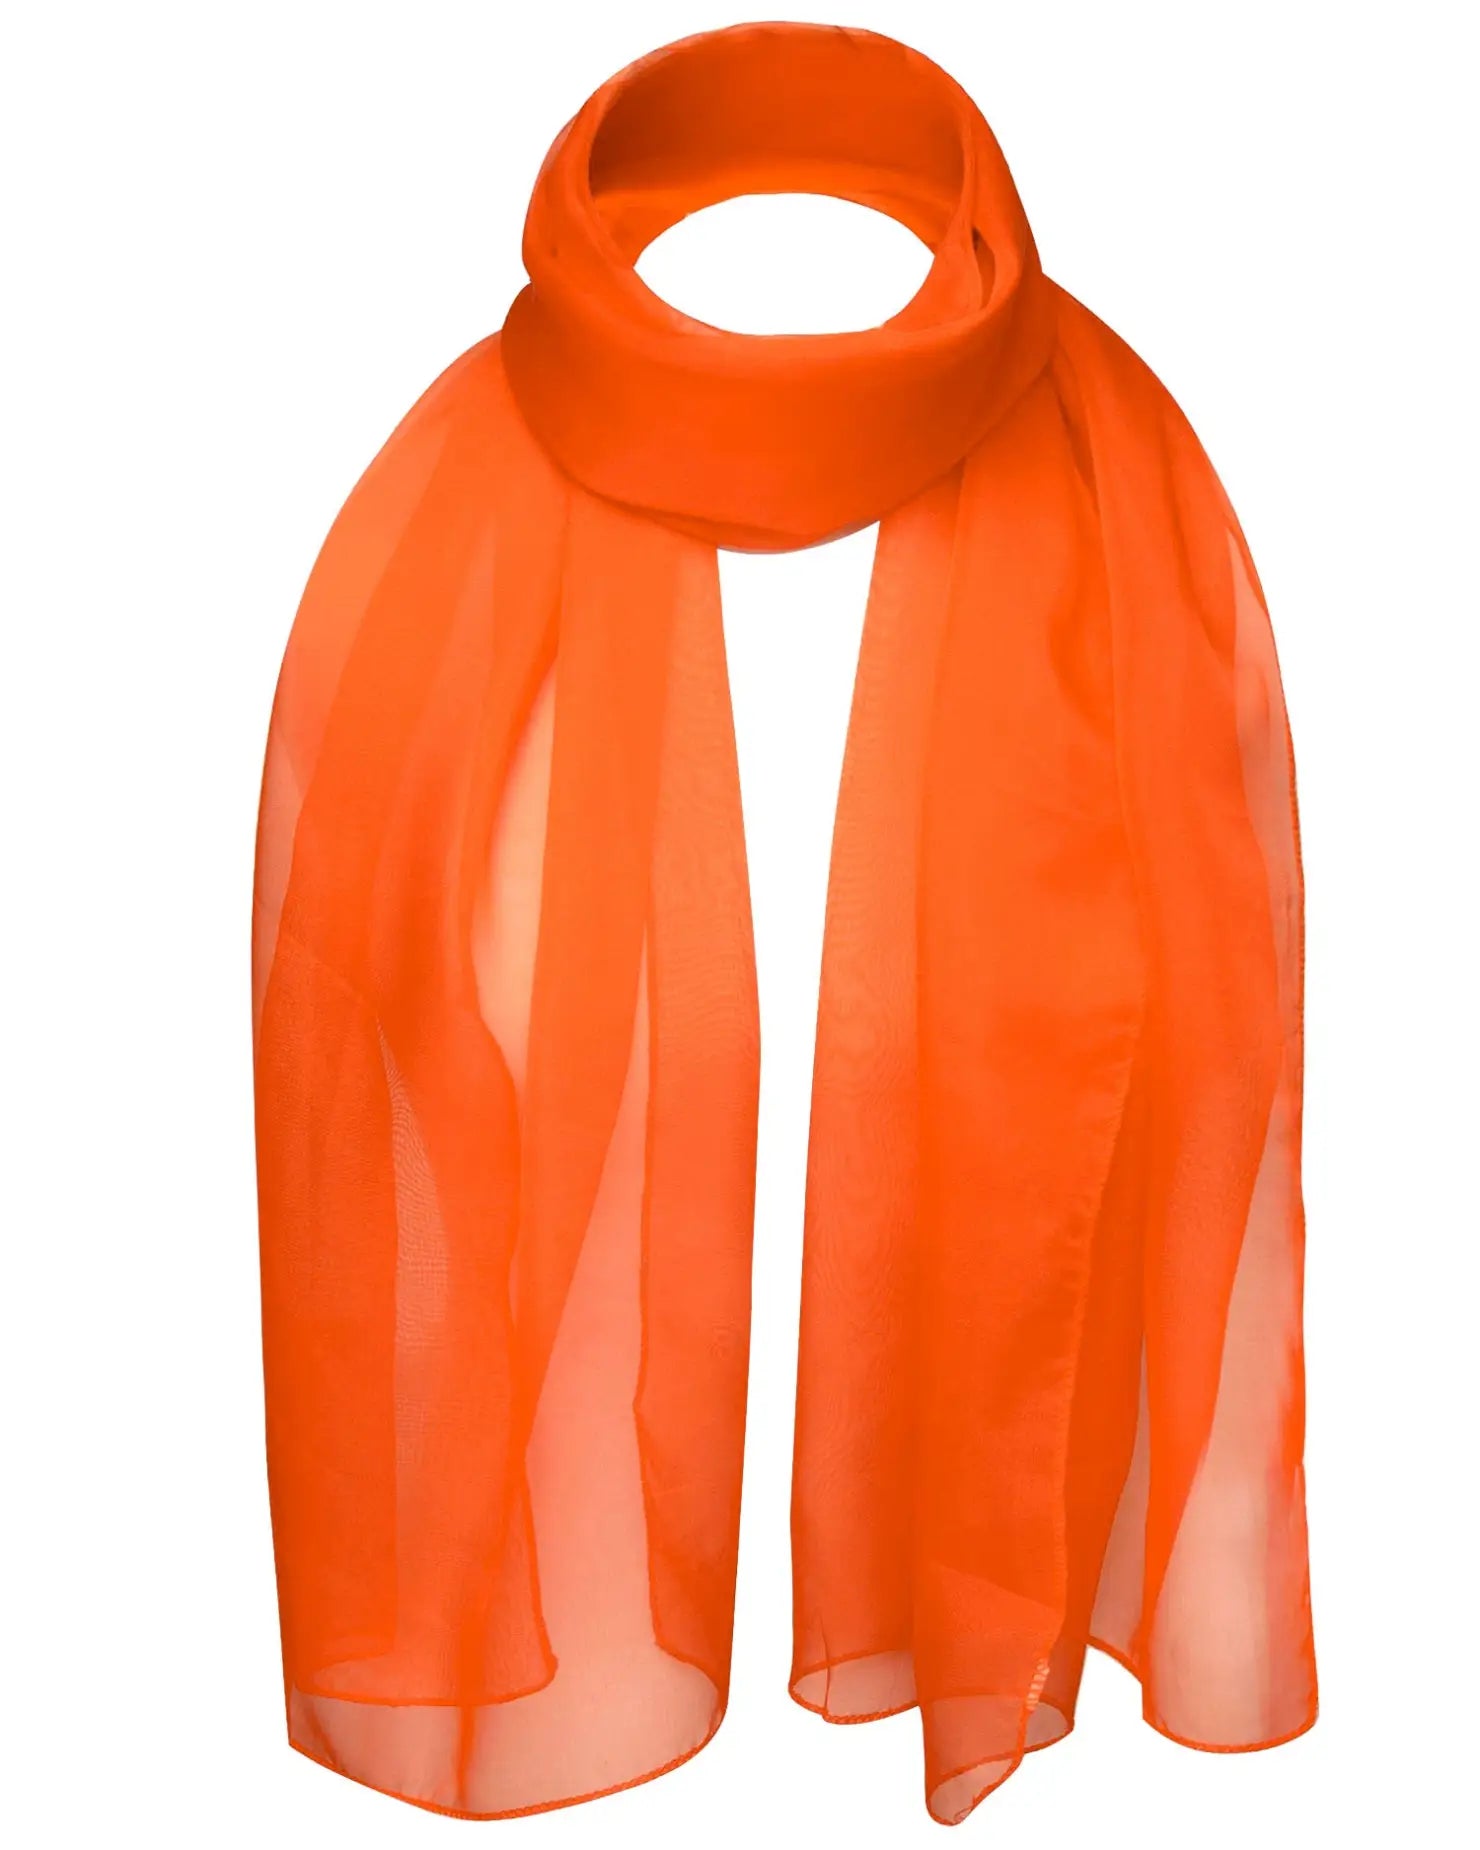 Classic plain chiffon scarf: bright orange on white background.